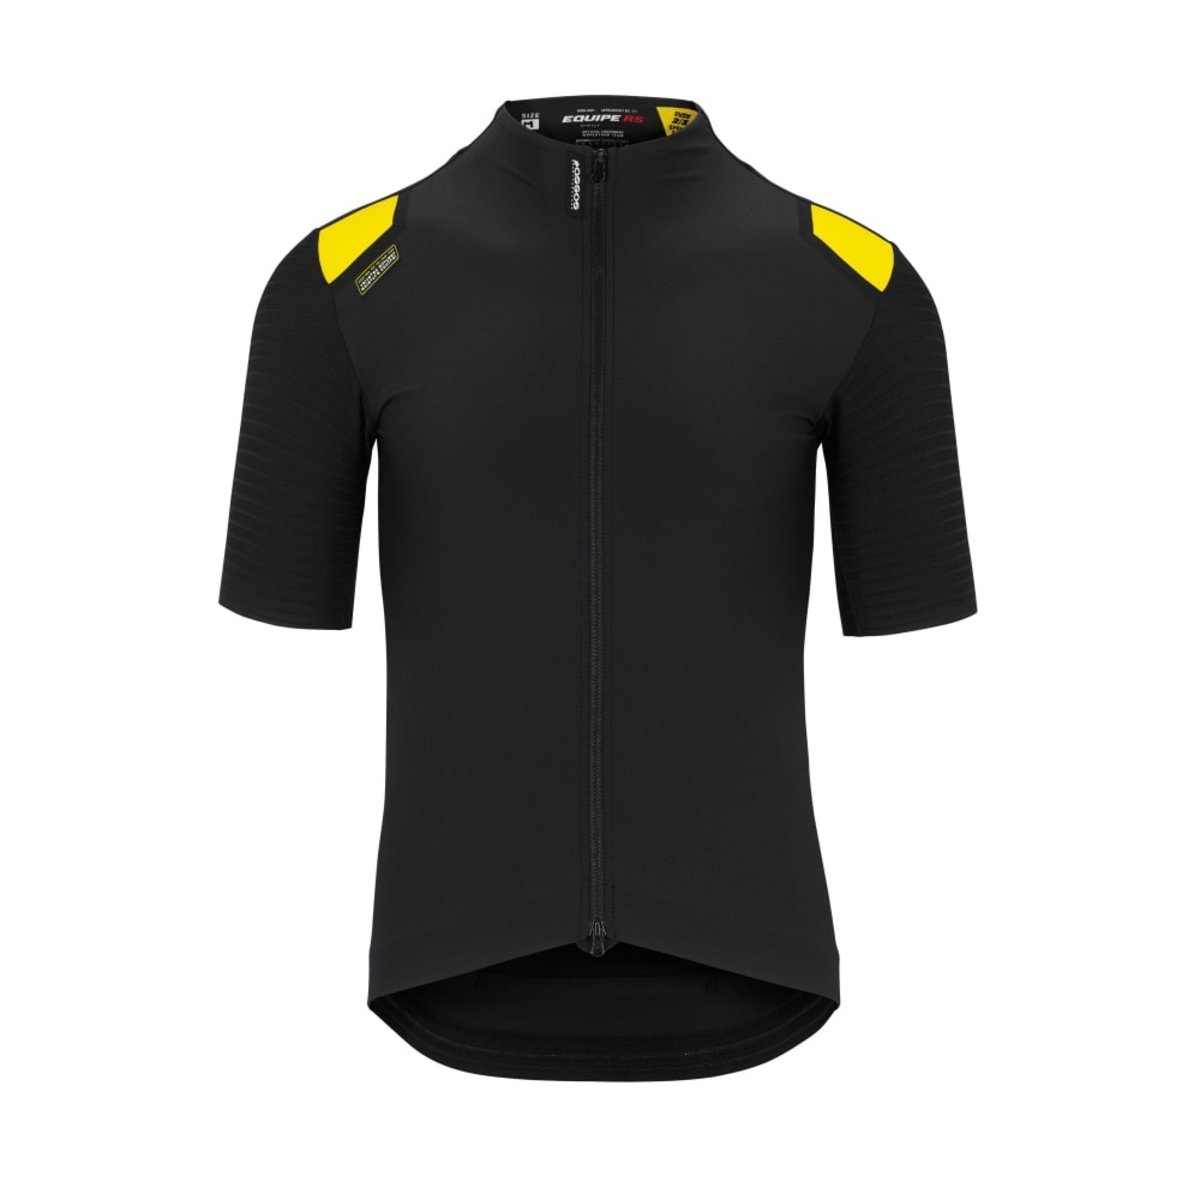 Джерси ASSOS Equipe RS Spring Fall Aero SS Jersey Black Series, кор. рукав, мужское, черное с желтым, M фото 